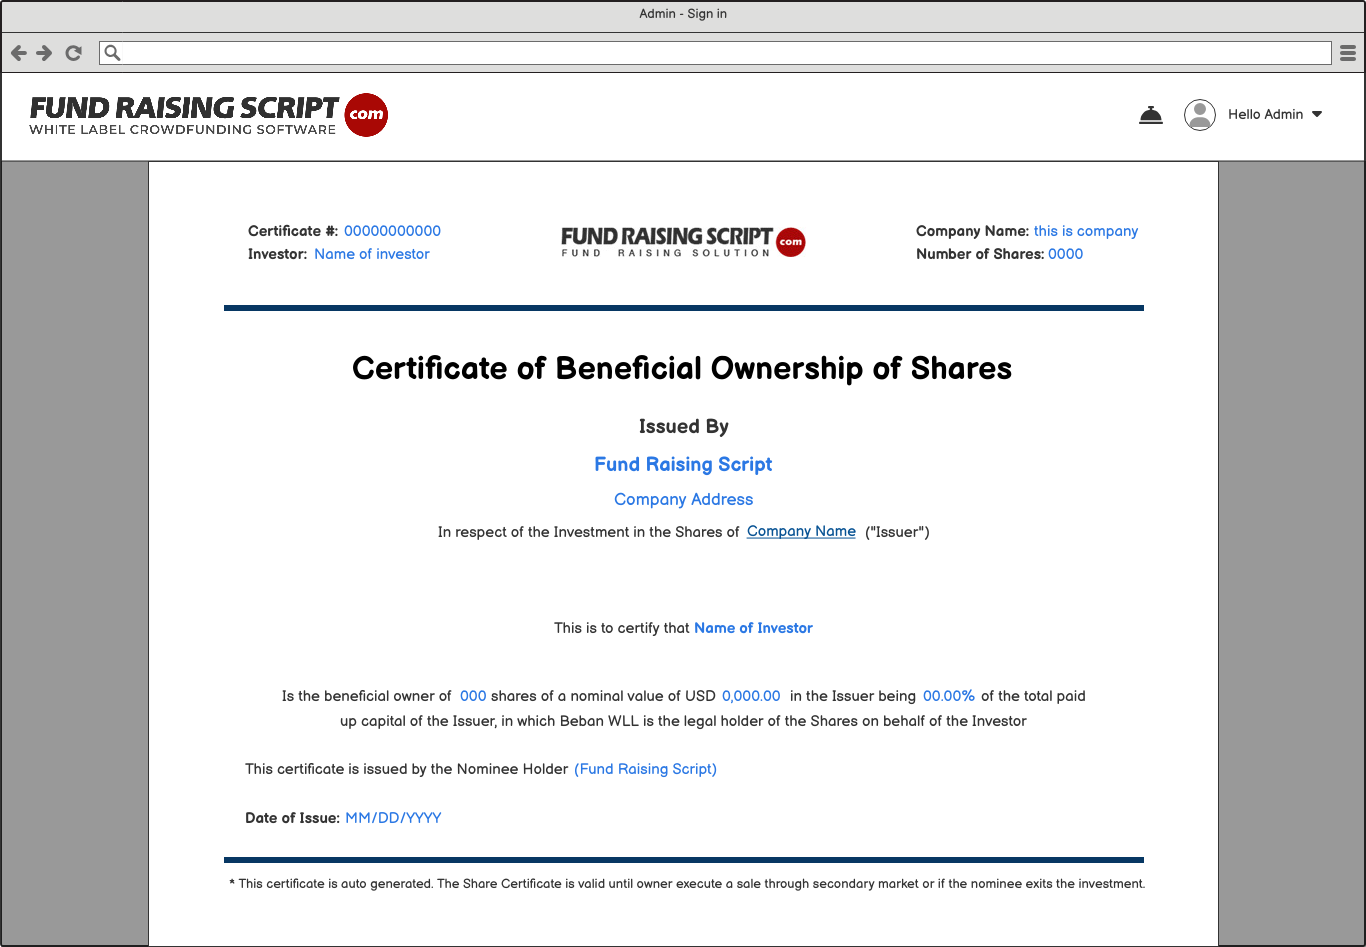 9.1 Buyer - Share certificate